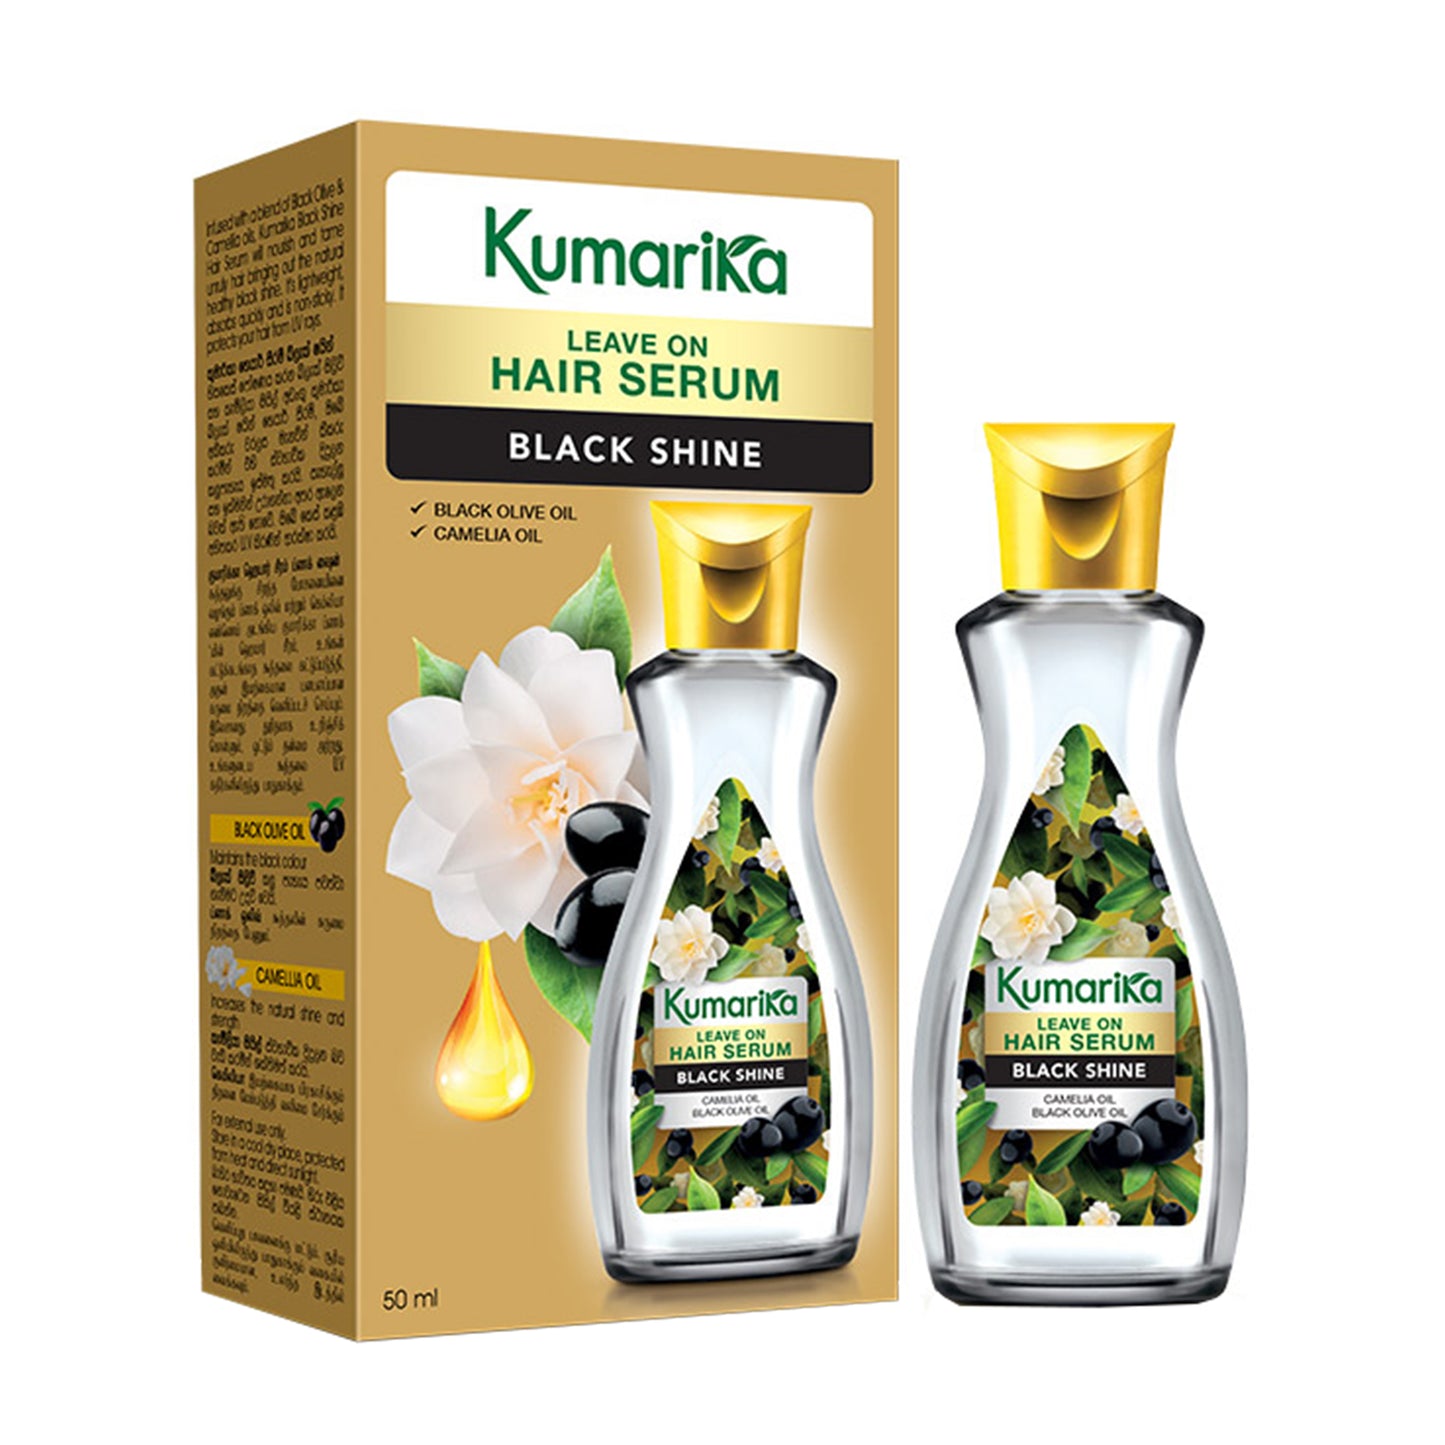 Kumarika Black Shine Hair Serum (50ml)